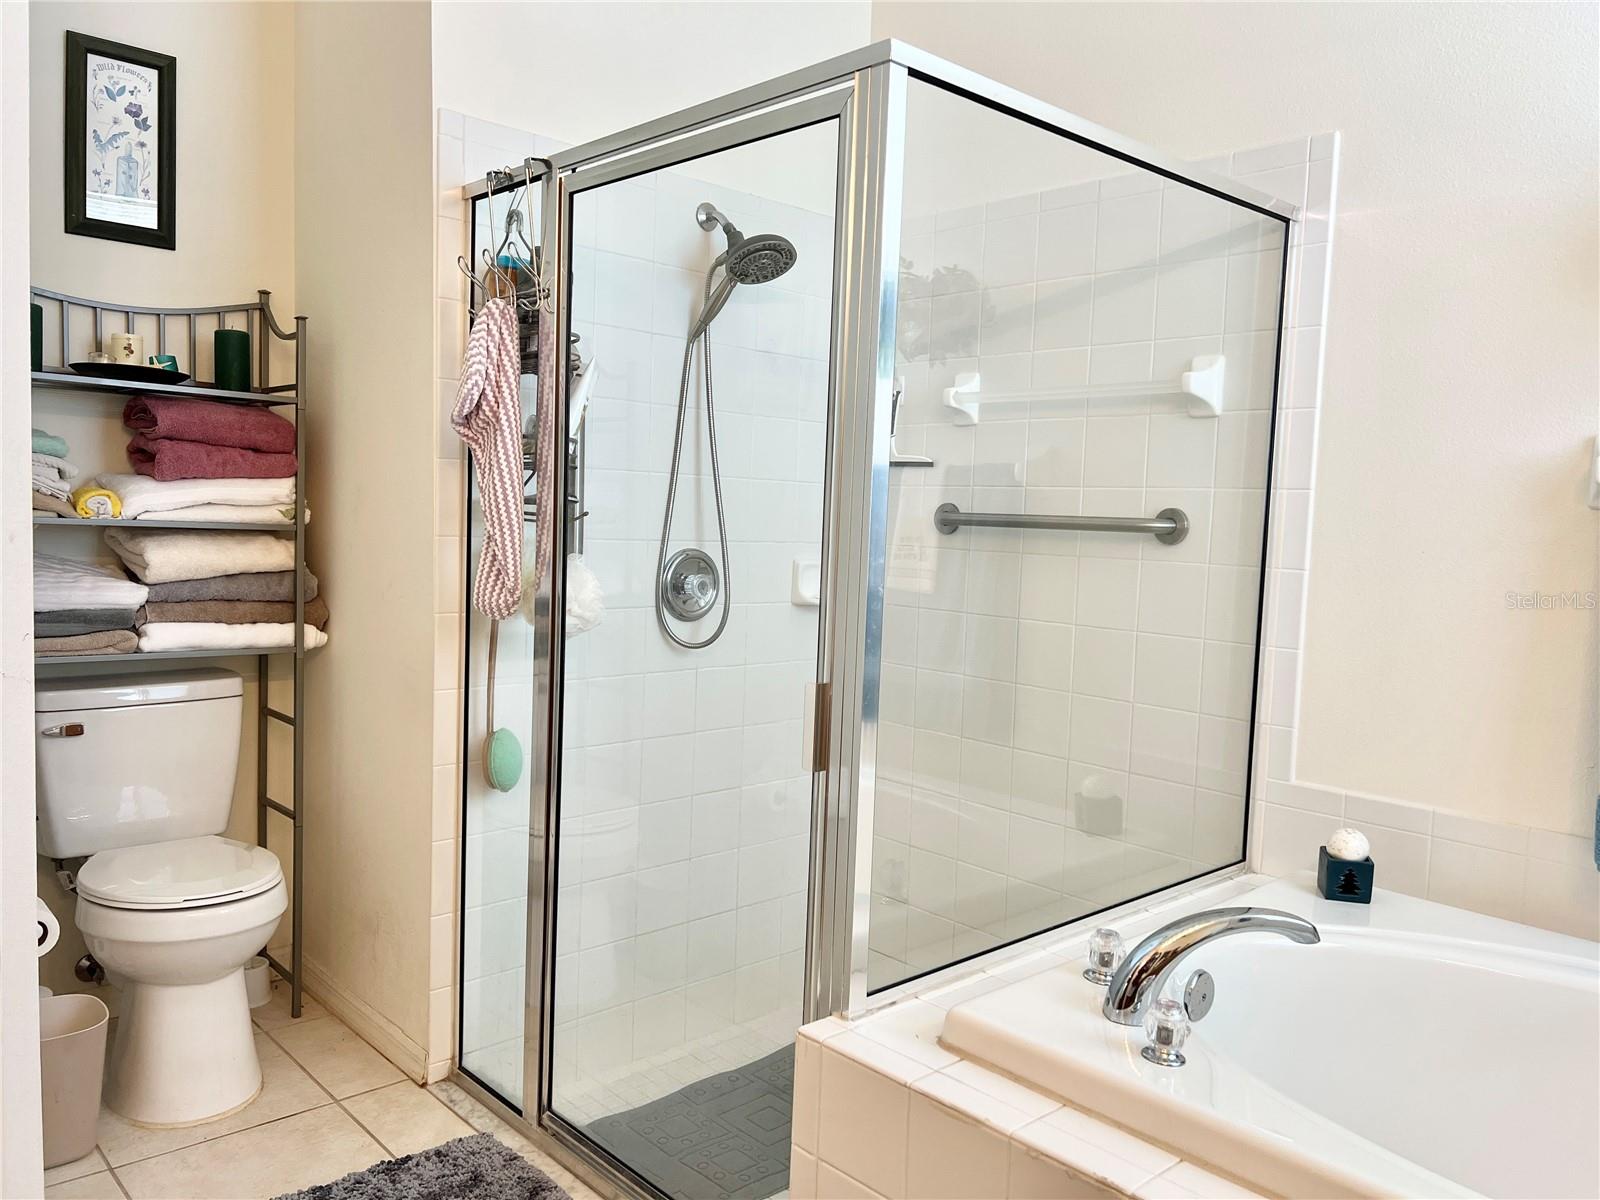 Primary Bath - Separate Shower